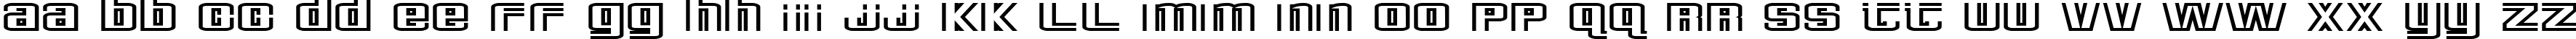 Пример написания английского алфавита шрифтом Deluxe Ducks